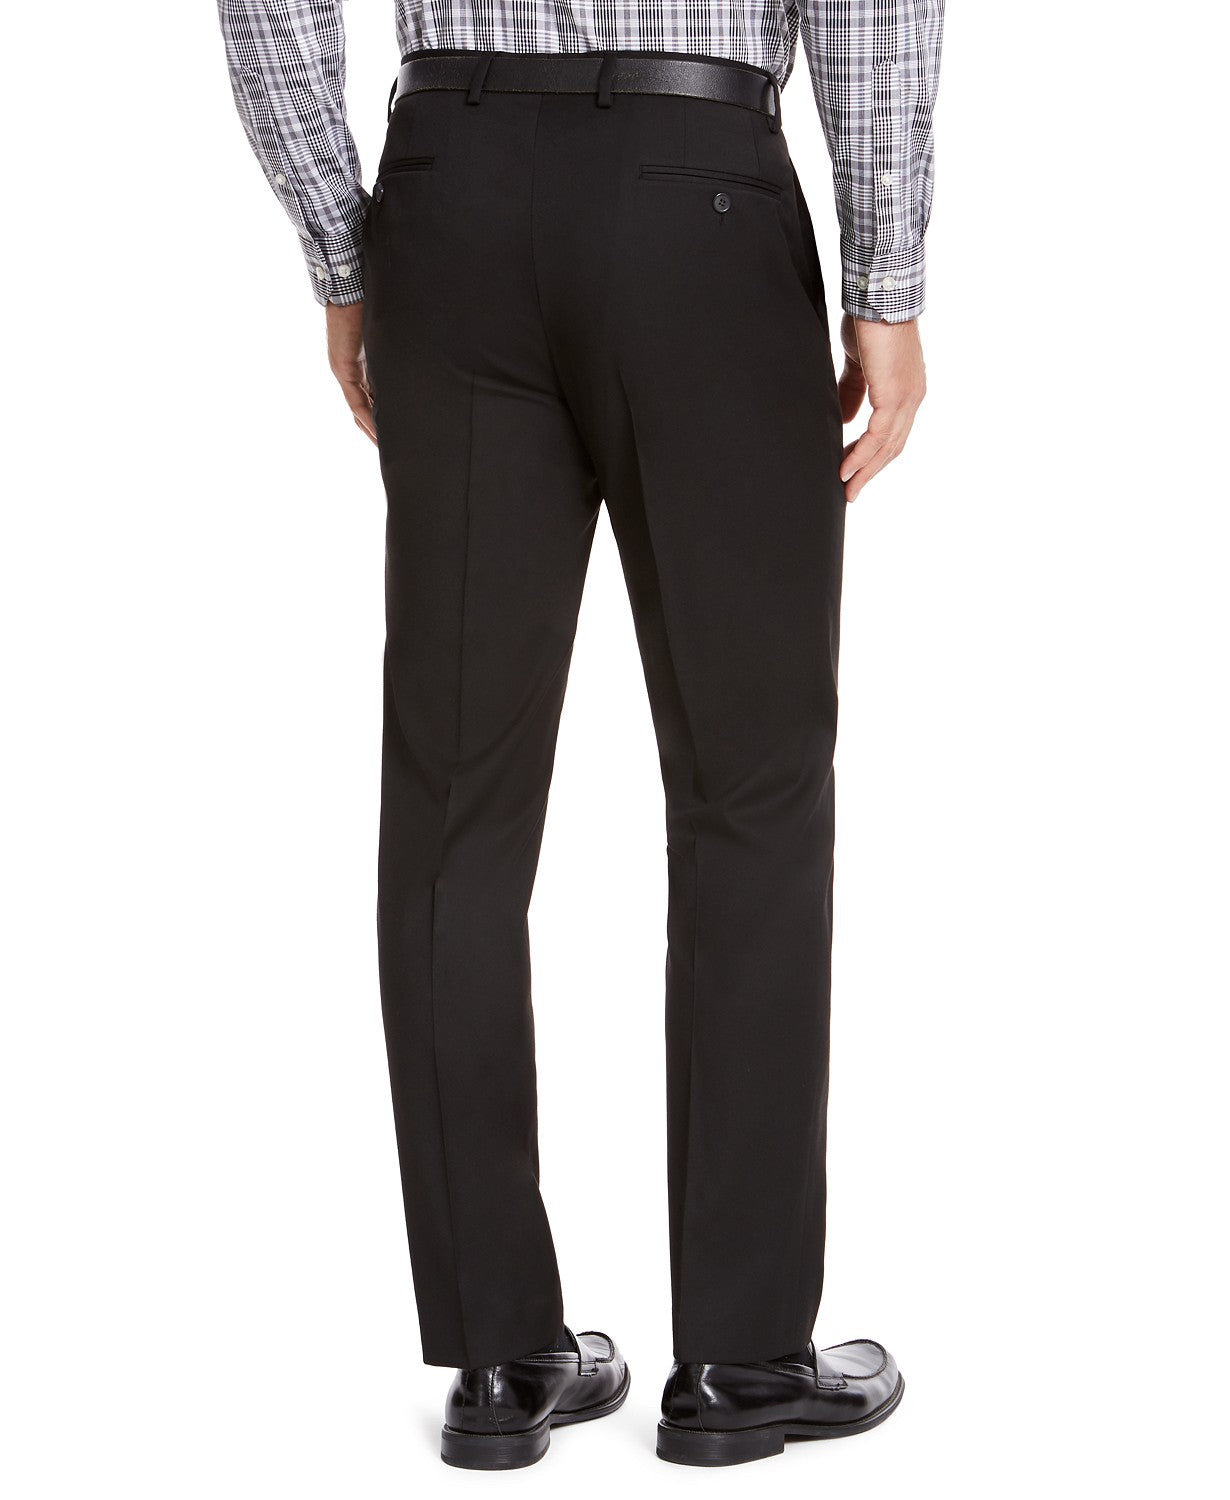 Izod Men's Classic-Fit Black Dress Pants 32 x 30 Flat Front